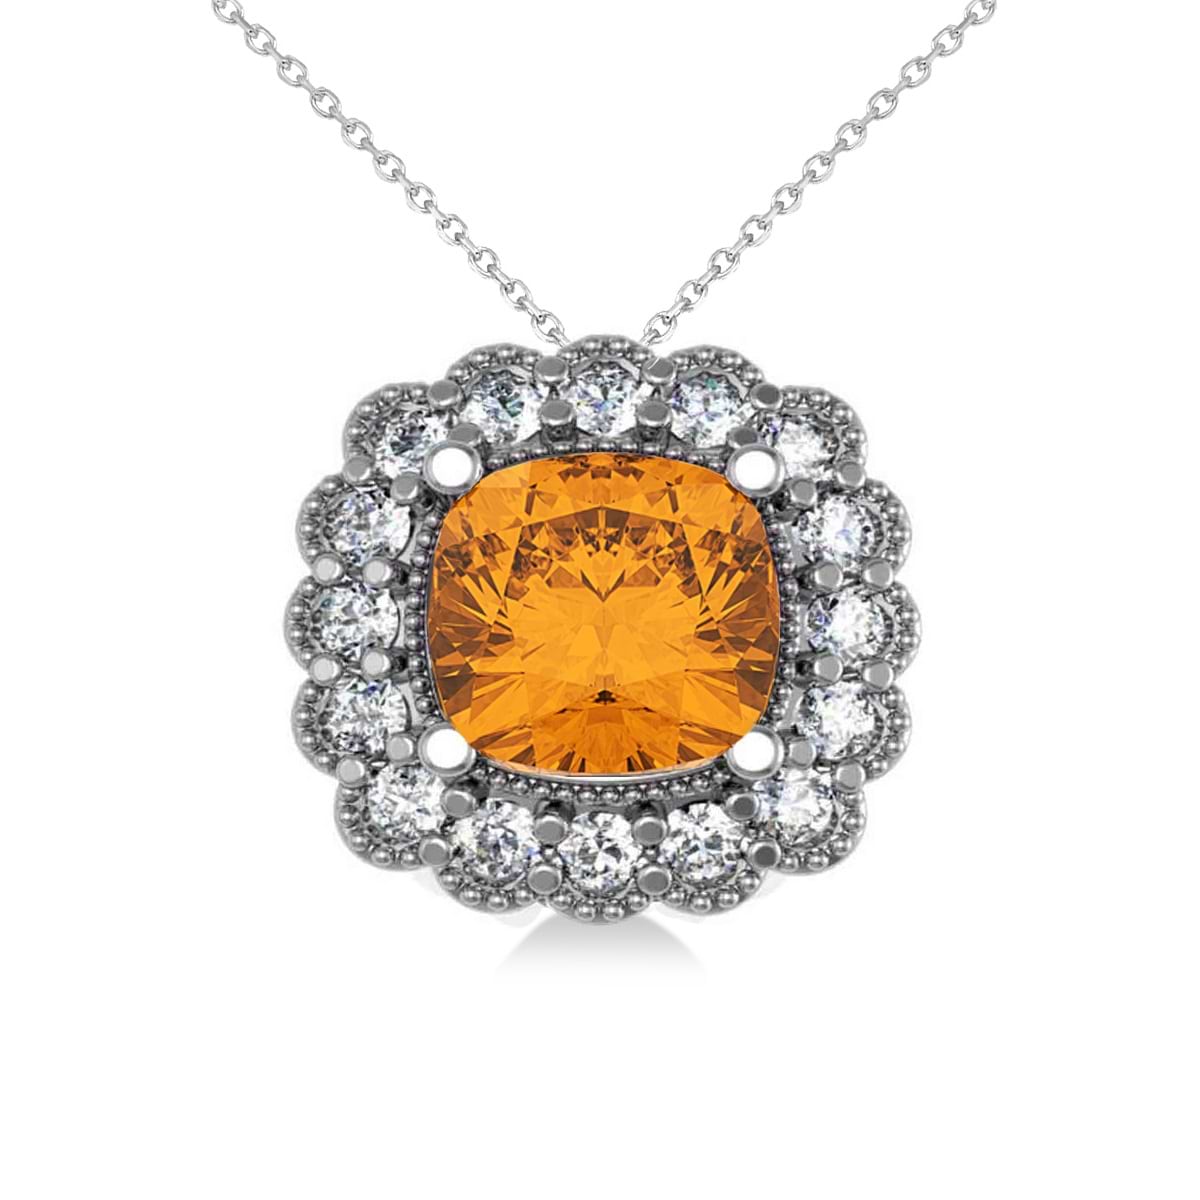 Citrine & Diamond Floral Cushion Pendant Necklace 14k White Gold (2.43ct)